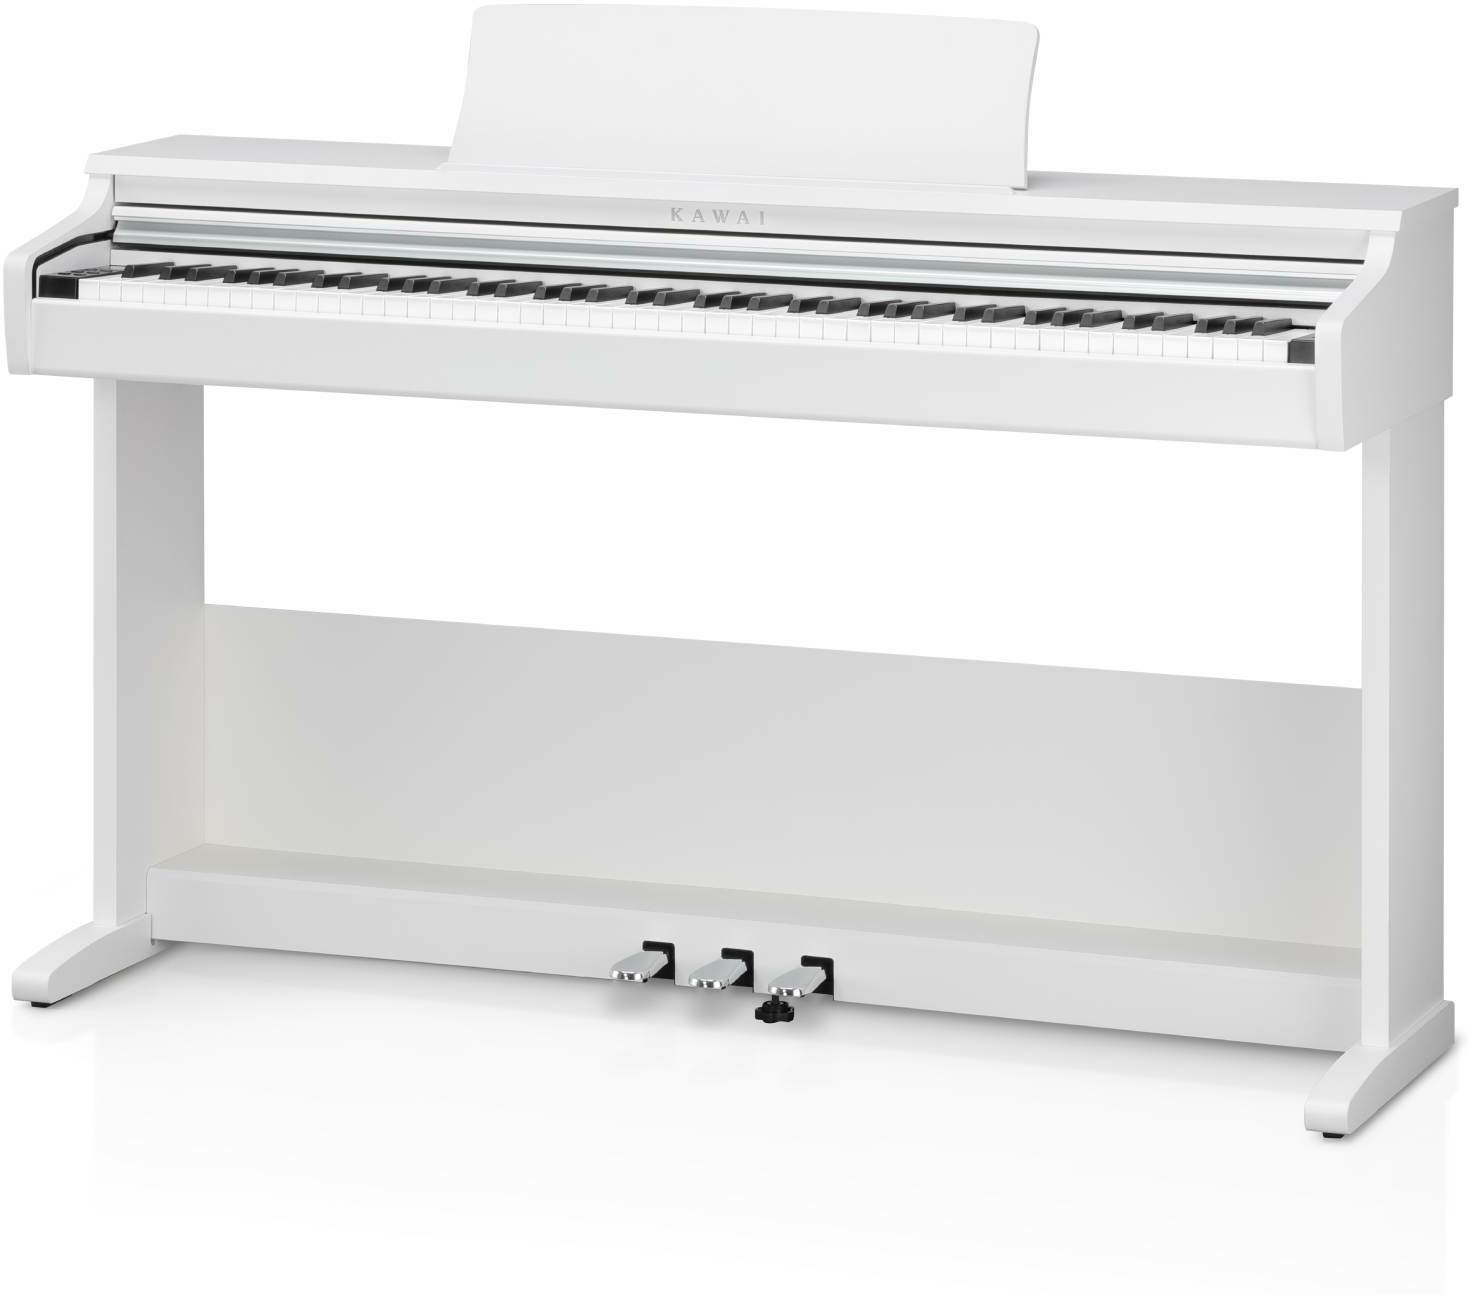 Kawai Kdp 75 Wh - Piano digital con mueble - Main picture